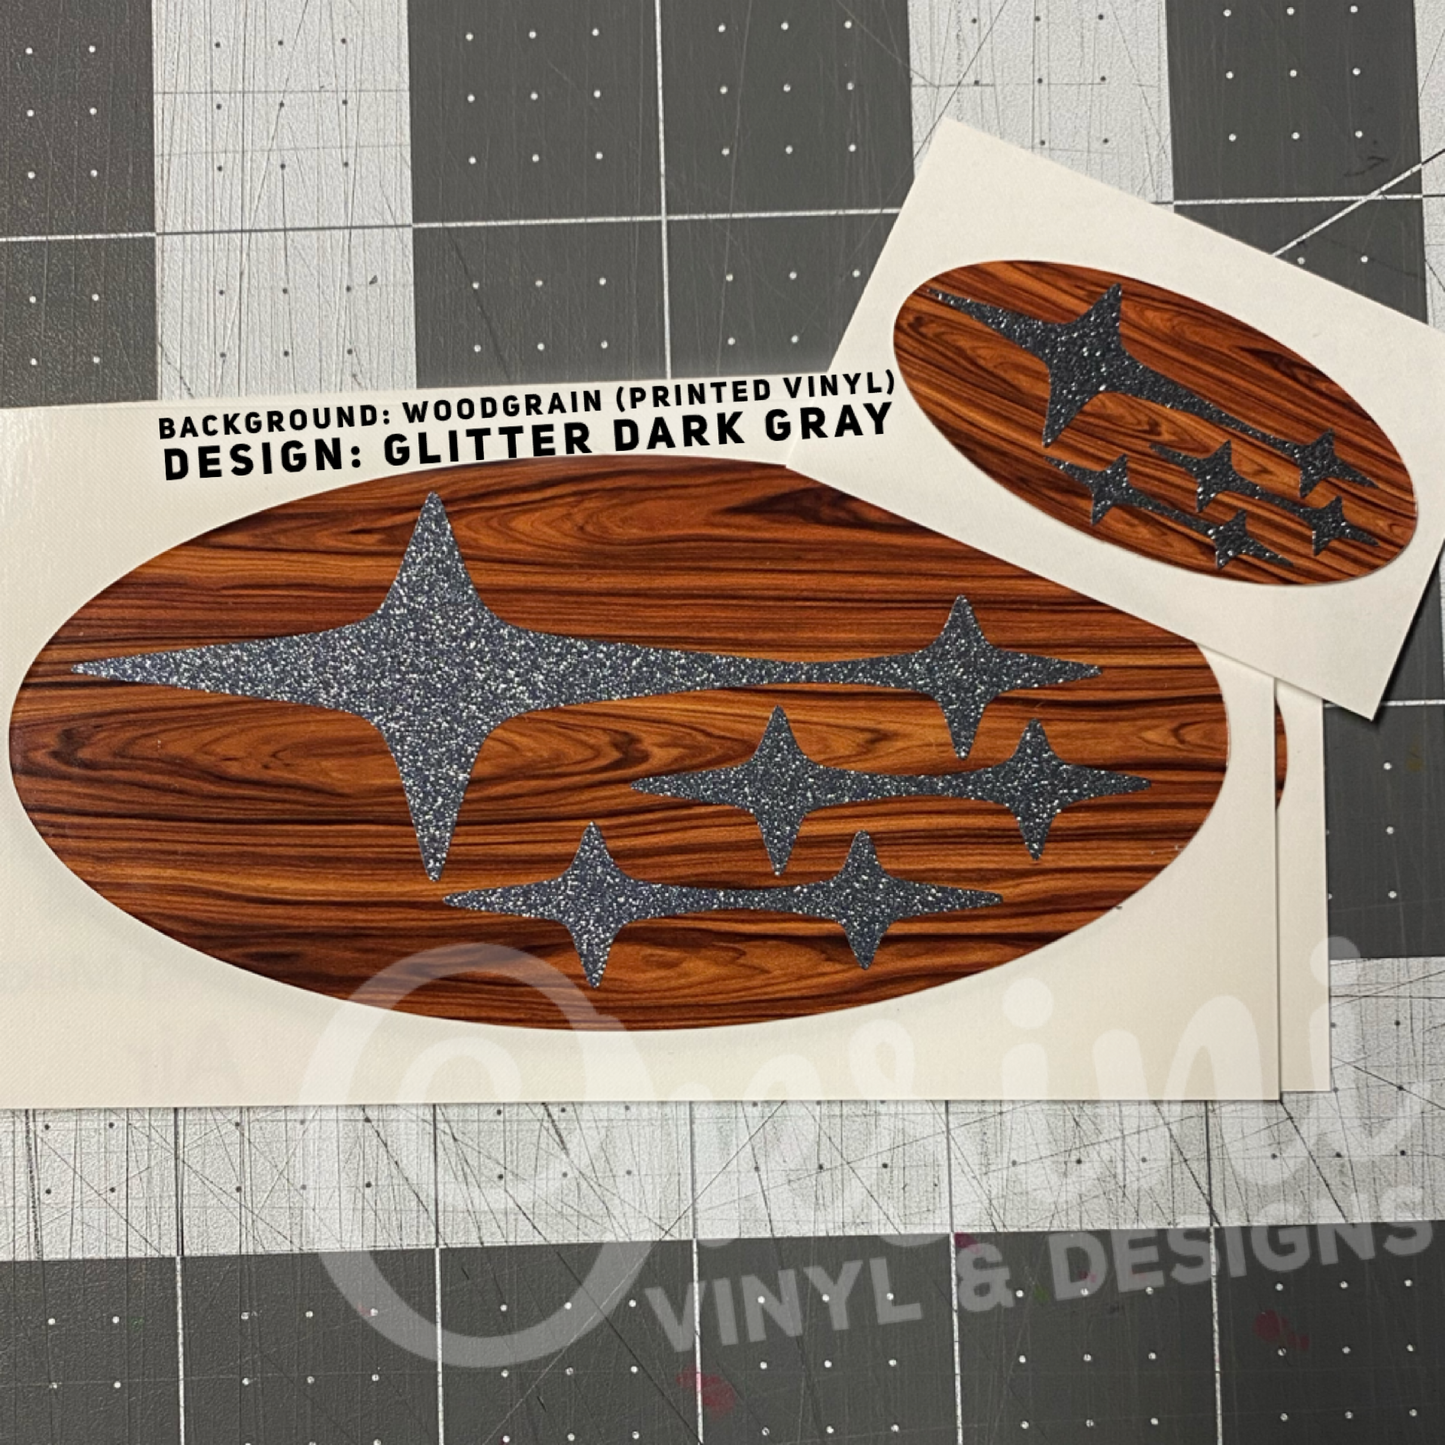 Woodgrain Emblem Overlay Decal Set